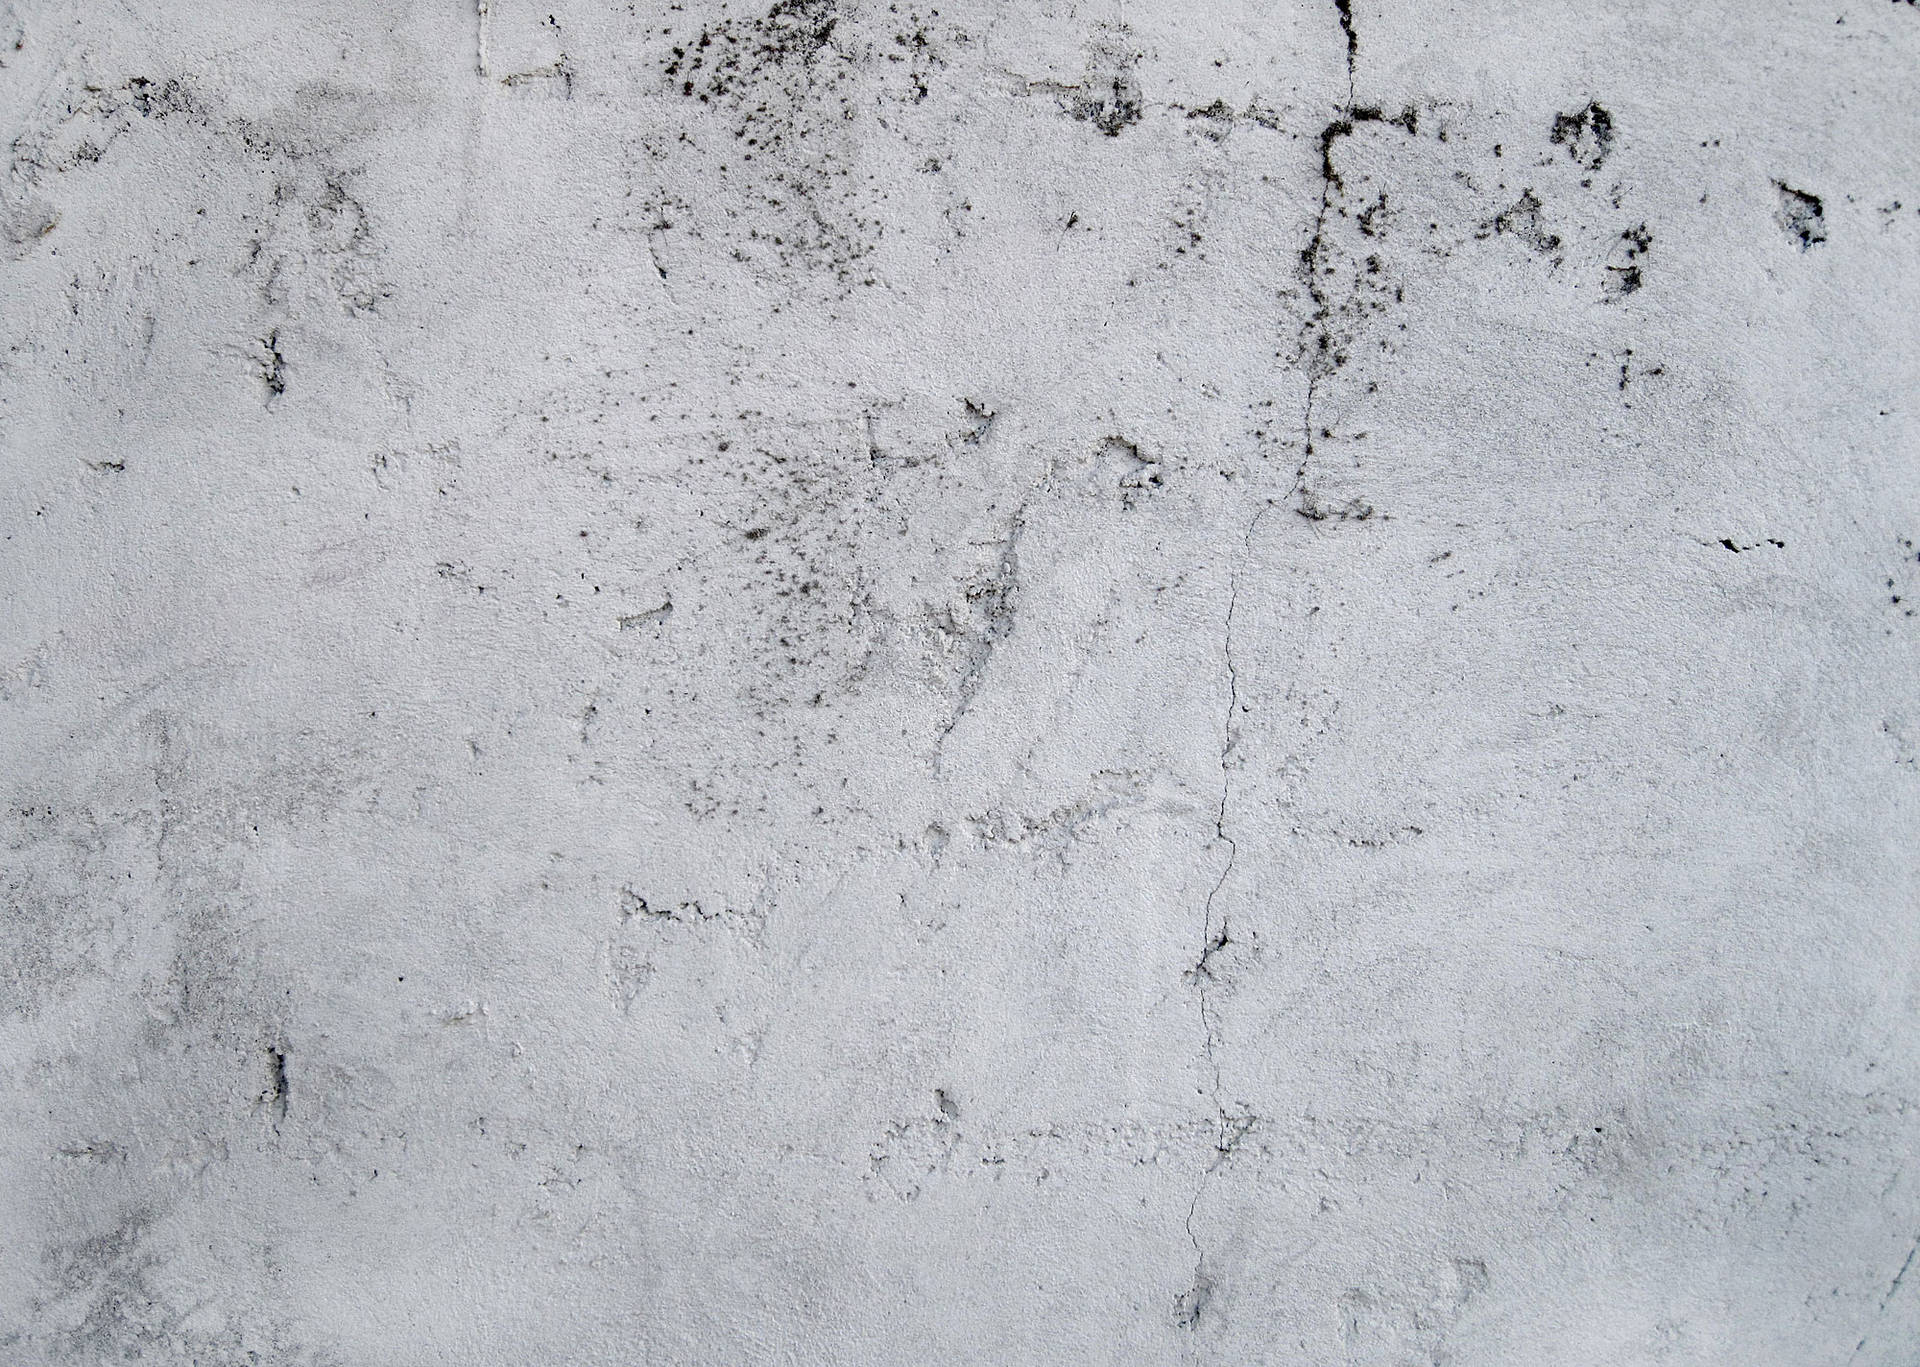 Dirty White Grunge Texture Wallpaper